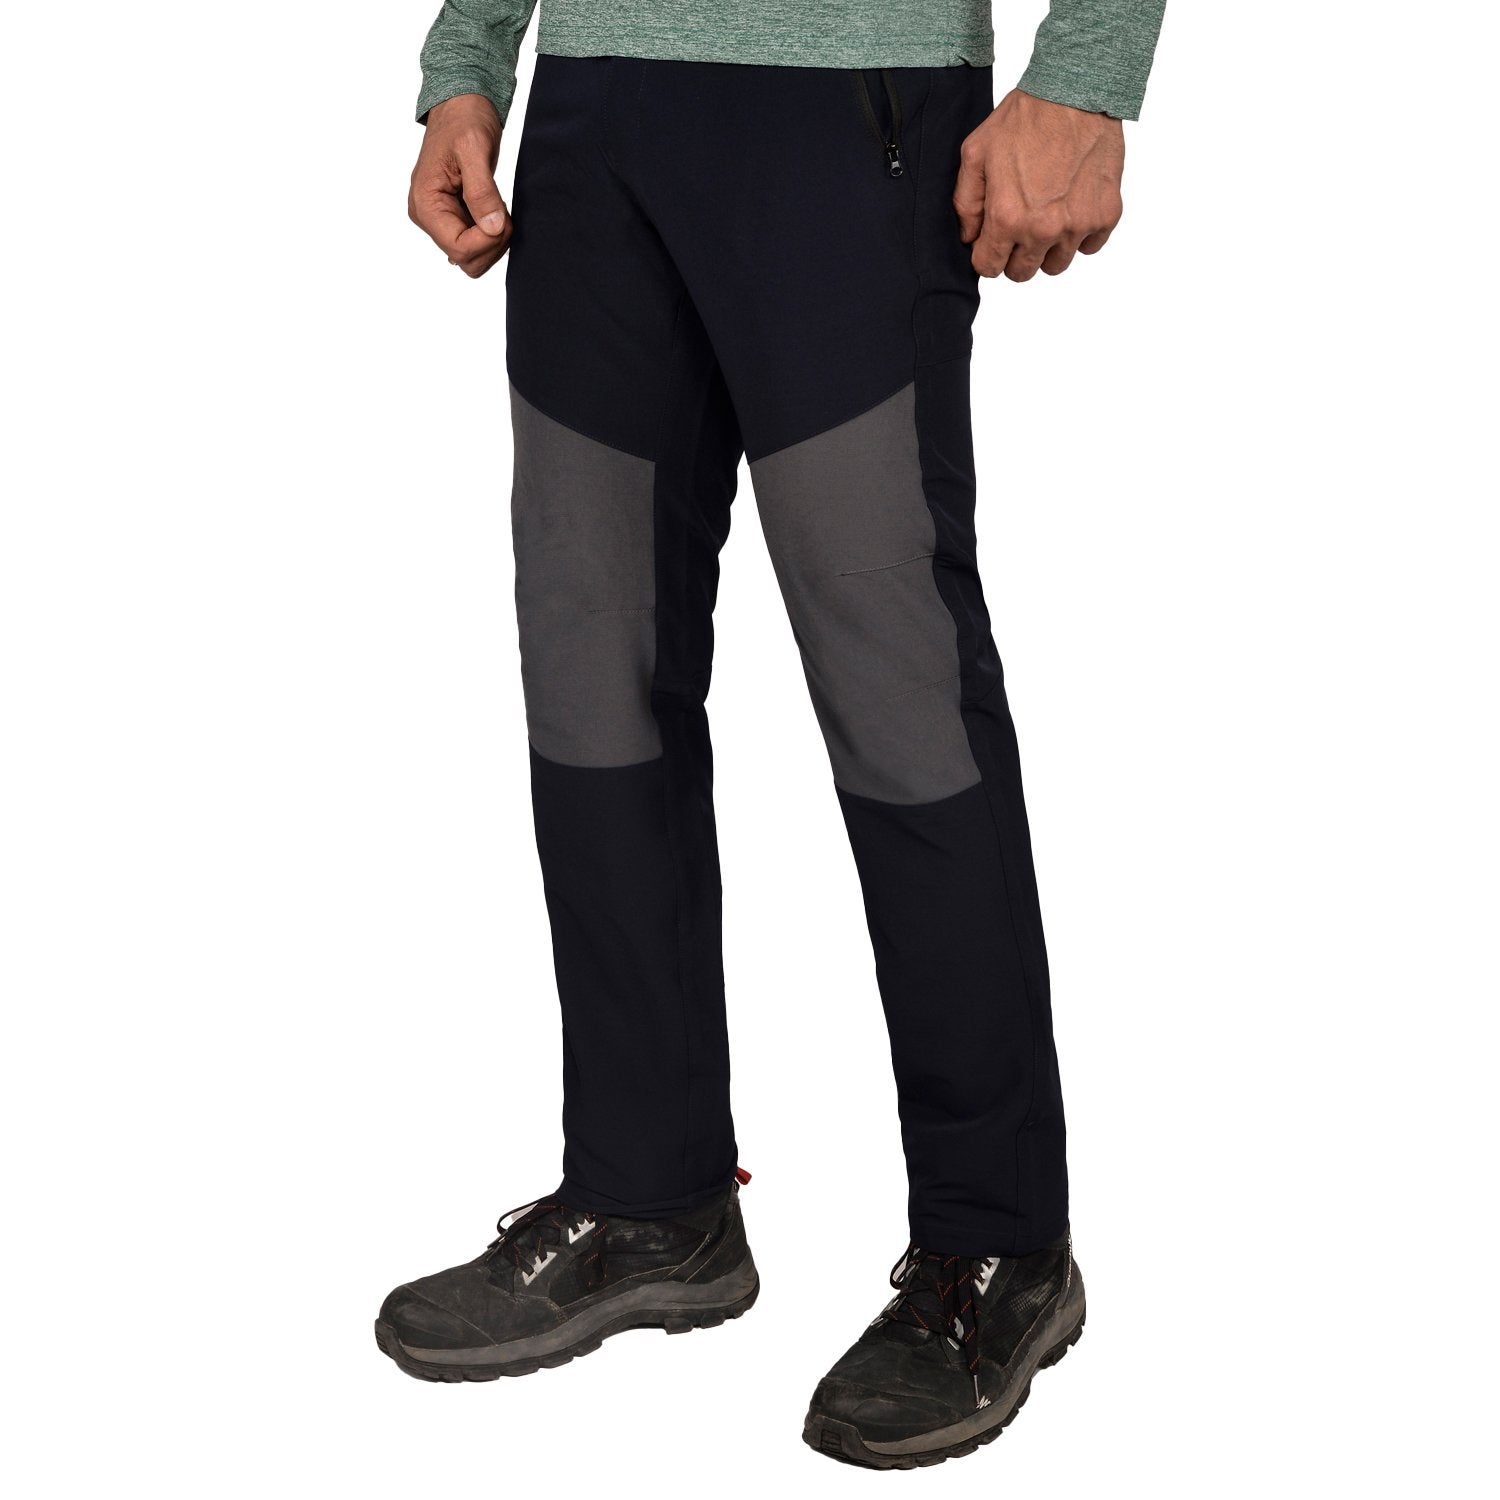 Buy Gokyo Alpine All Weather Trekking Pants | Trekking & Hiking Pants at Gokyo Outdoor Clothing & Gear